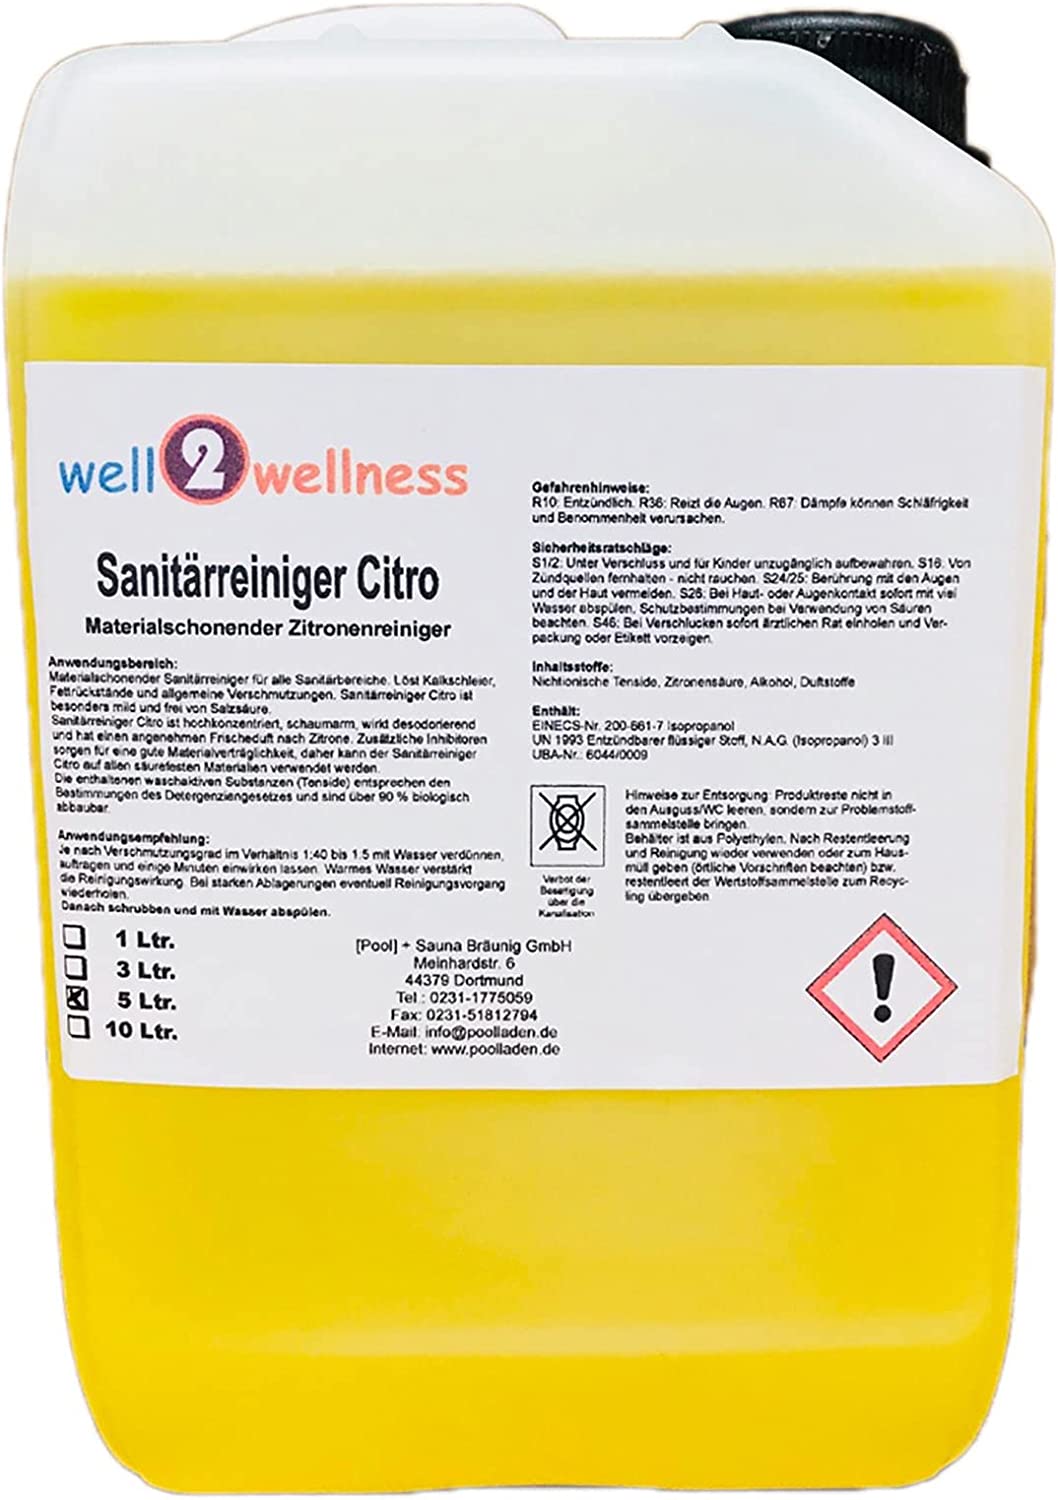 well2wellness® Pool Sanitärreiniger Citro